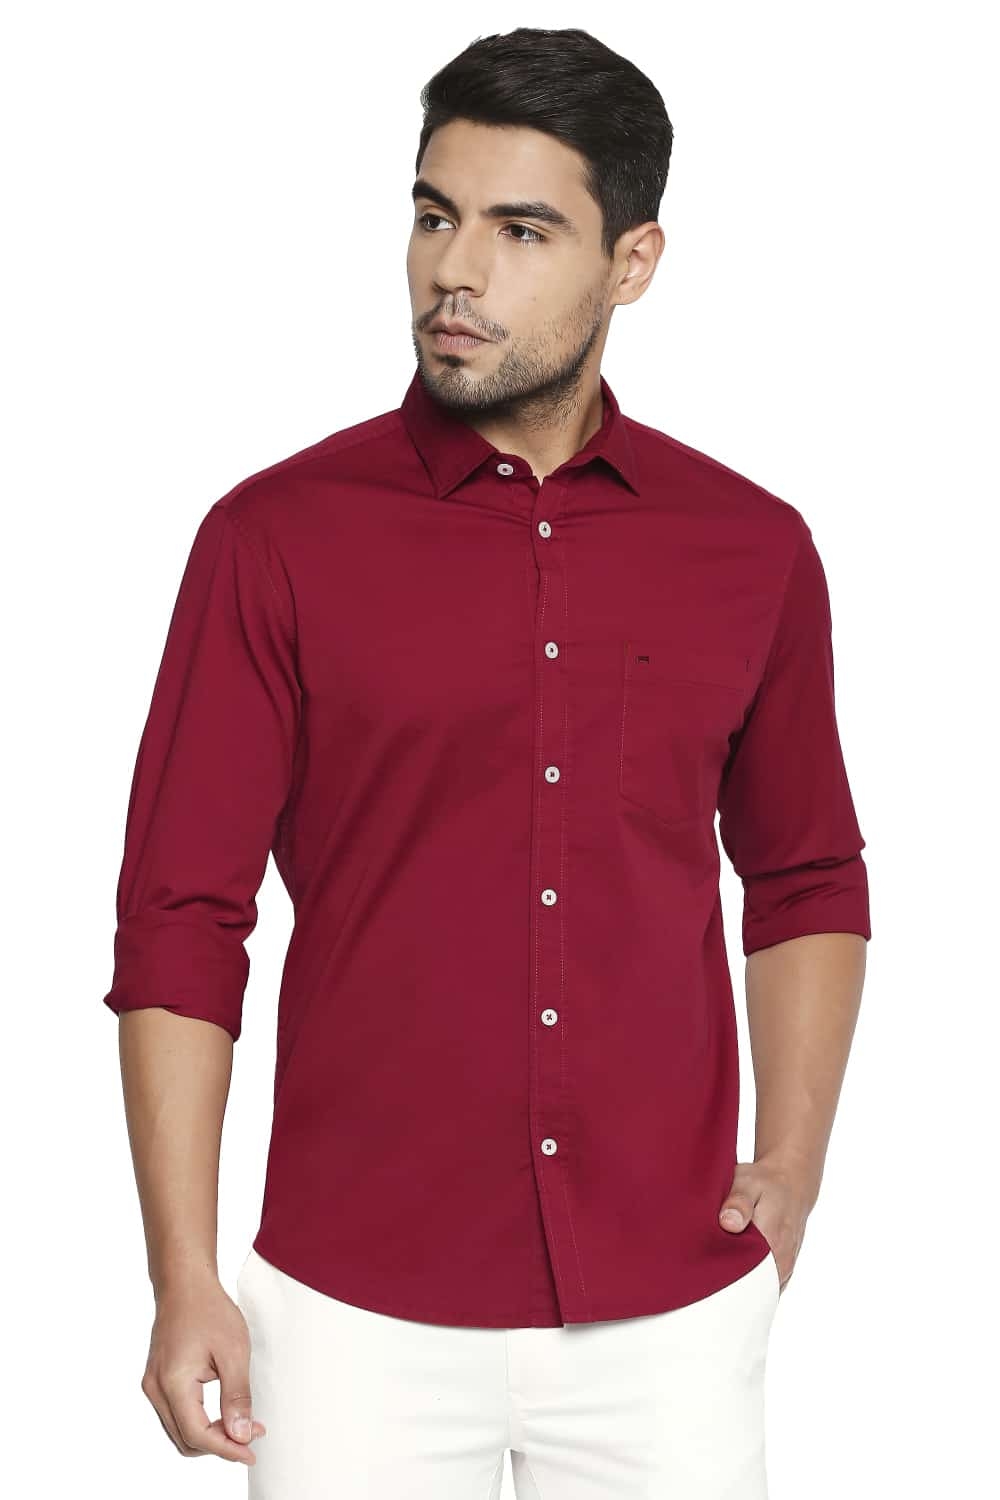 Basics | Basics Slim Fit Scooter Red Stretch Shirt